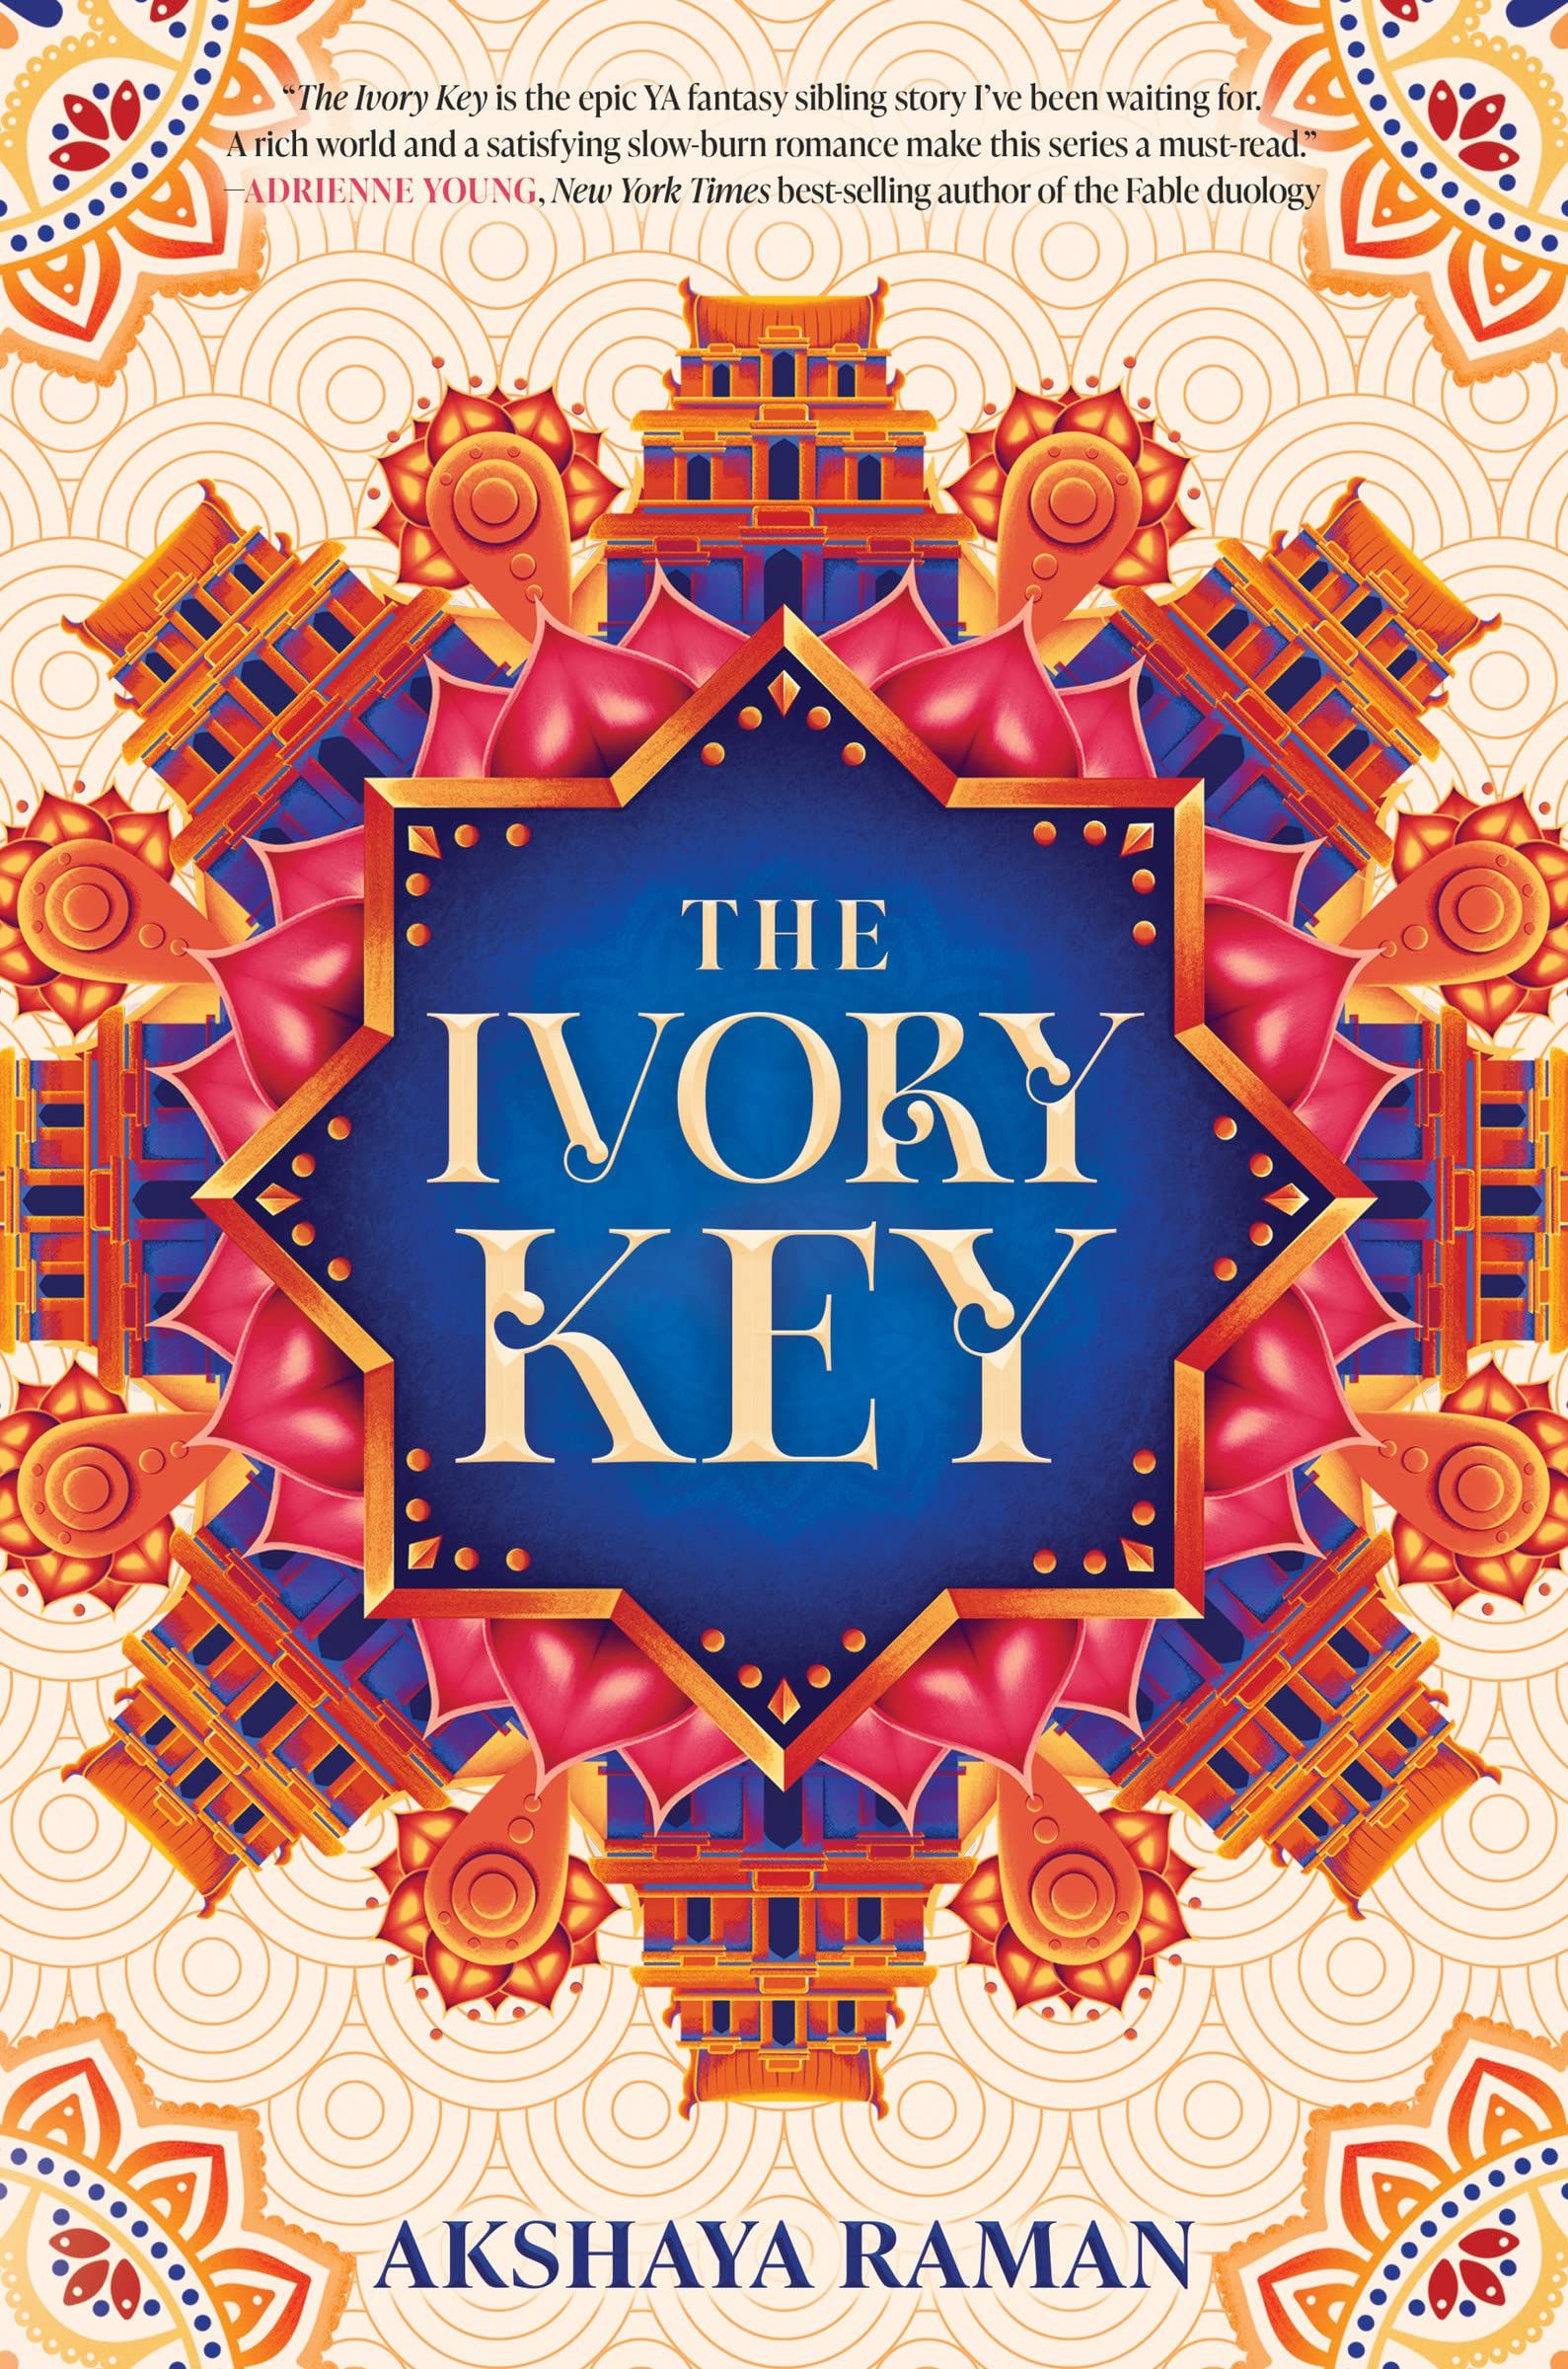 Cover of "The Ivory Key" by Akshaya Raman